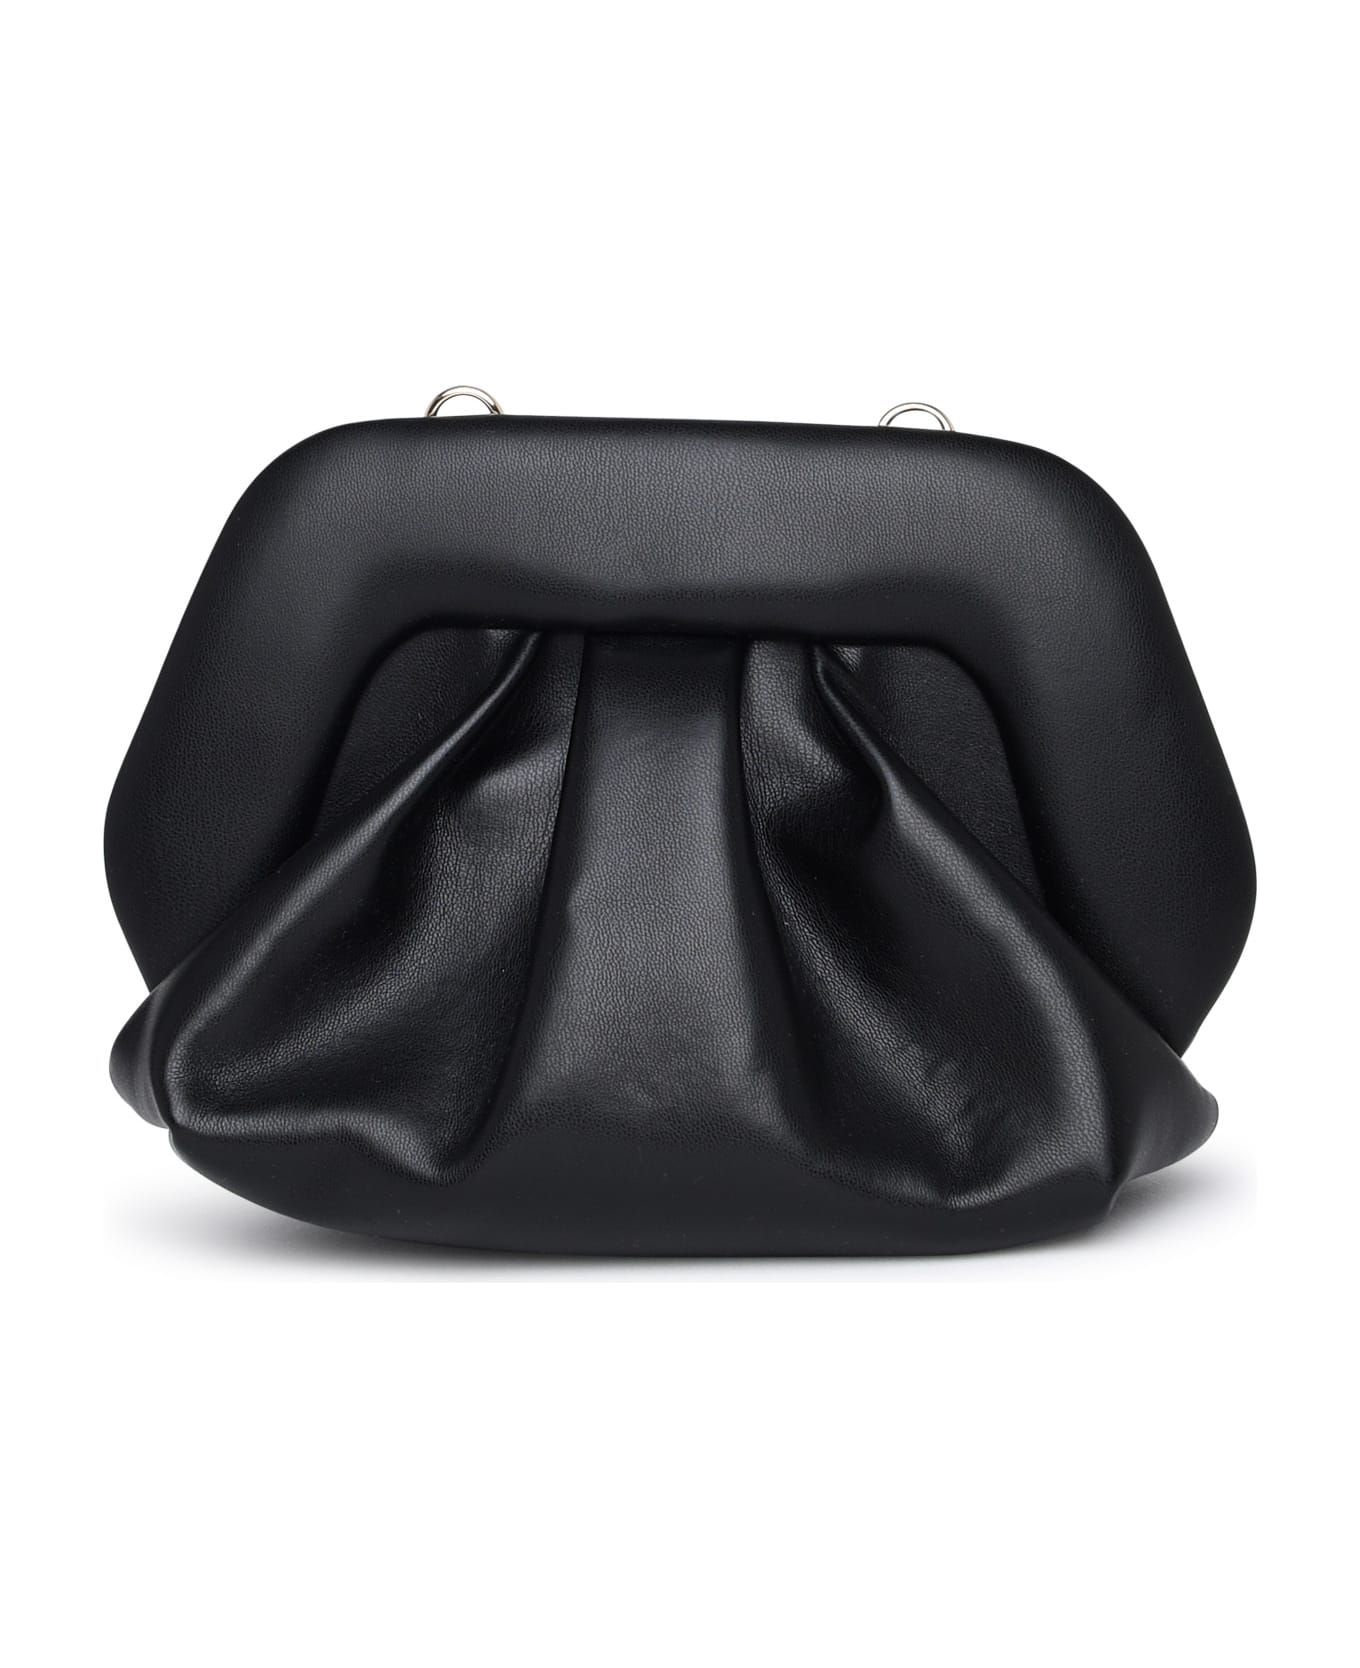 THEMOIRè Gea Bag In Black Vegan Leather - Black クラッチバッグ